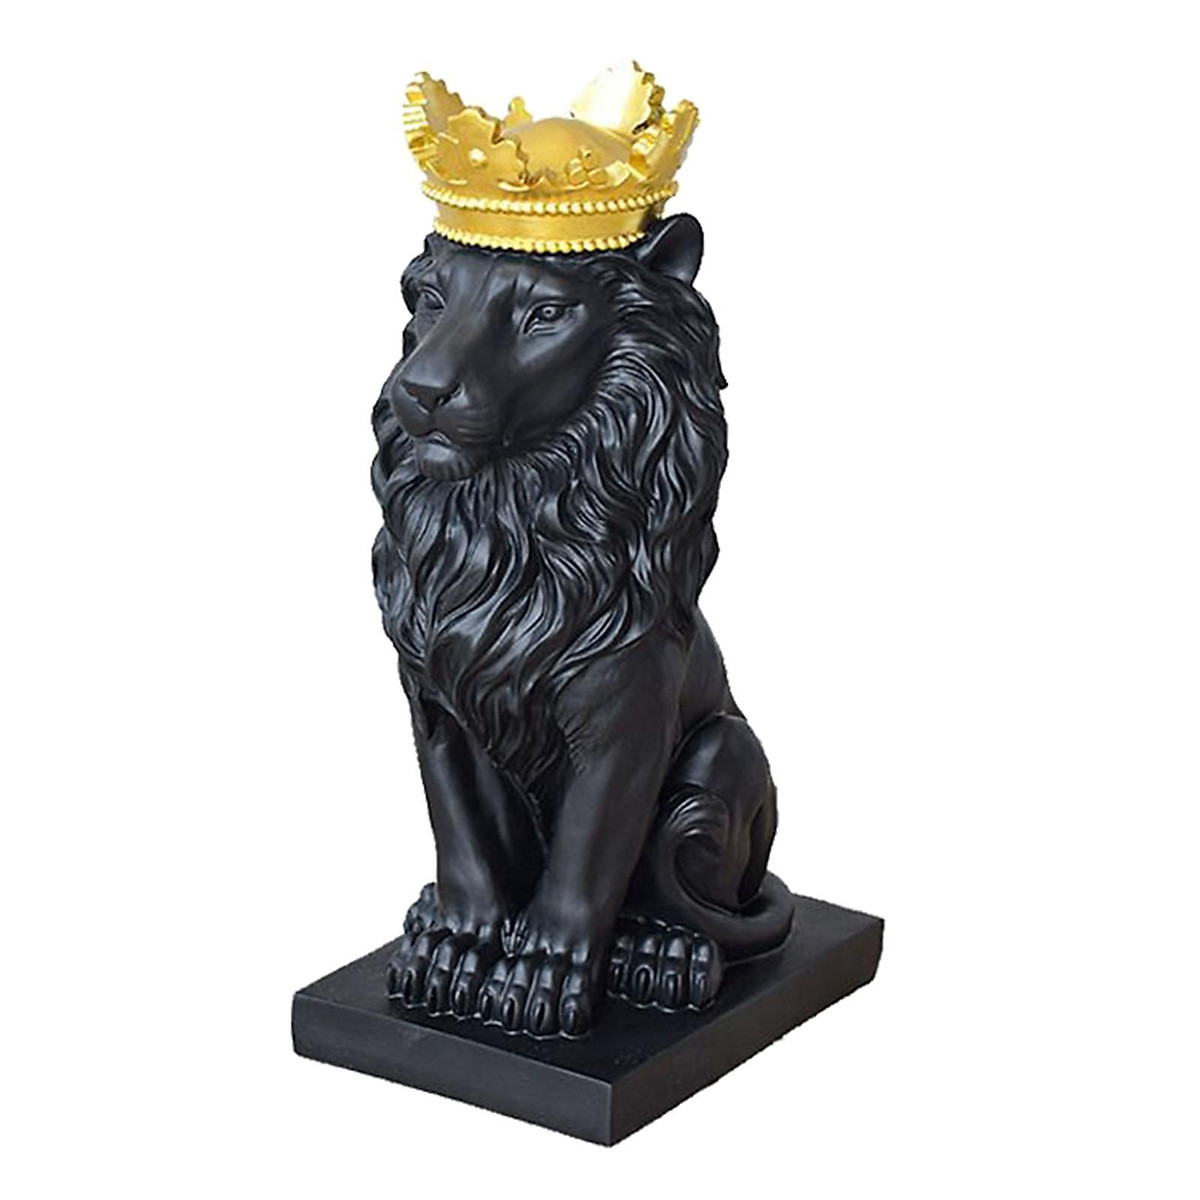 Lion Statue Animal Ornament Resin Home Sculpture Figurine Decor Black -  Trang trí nhà cửa